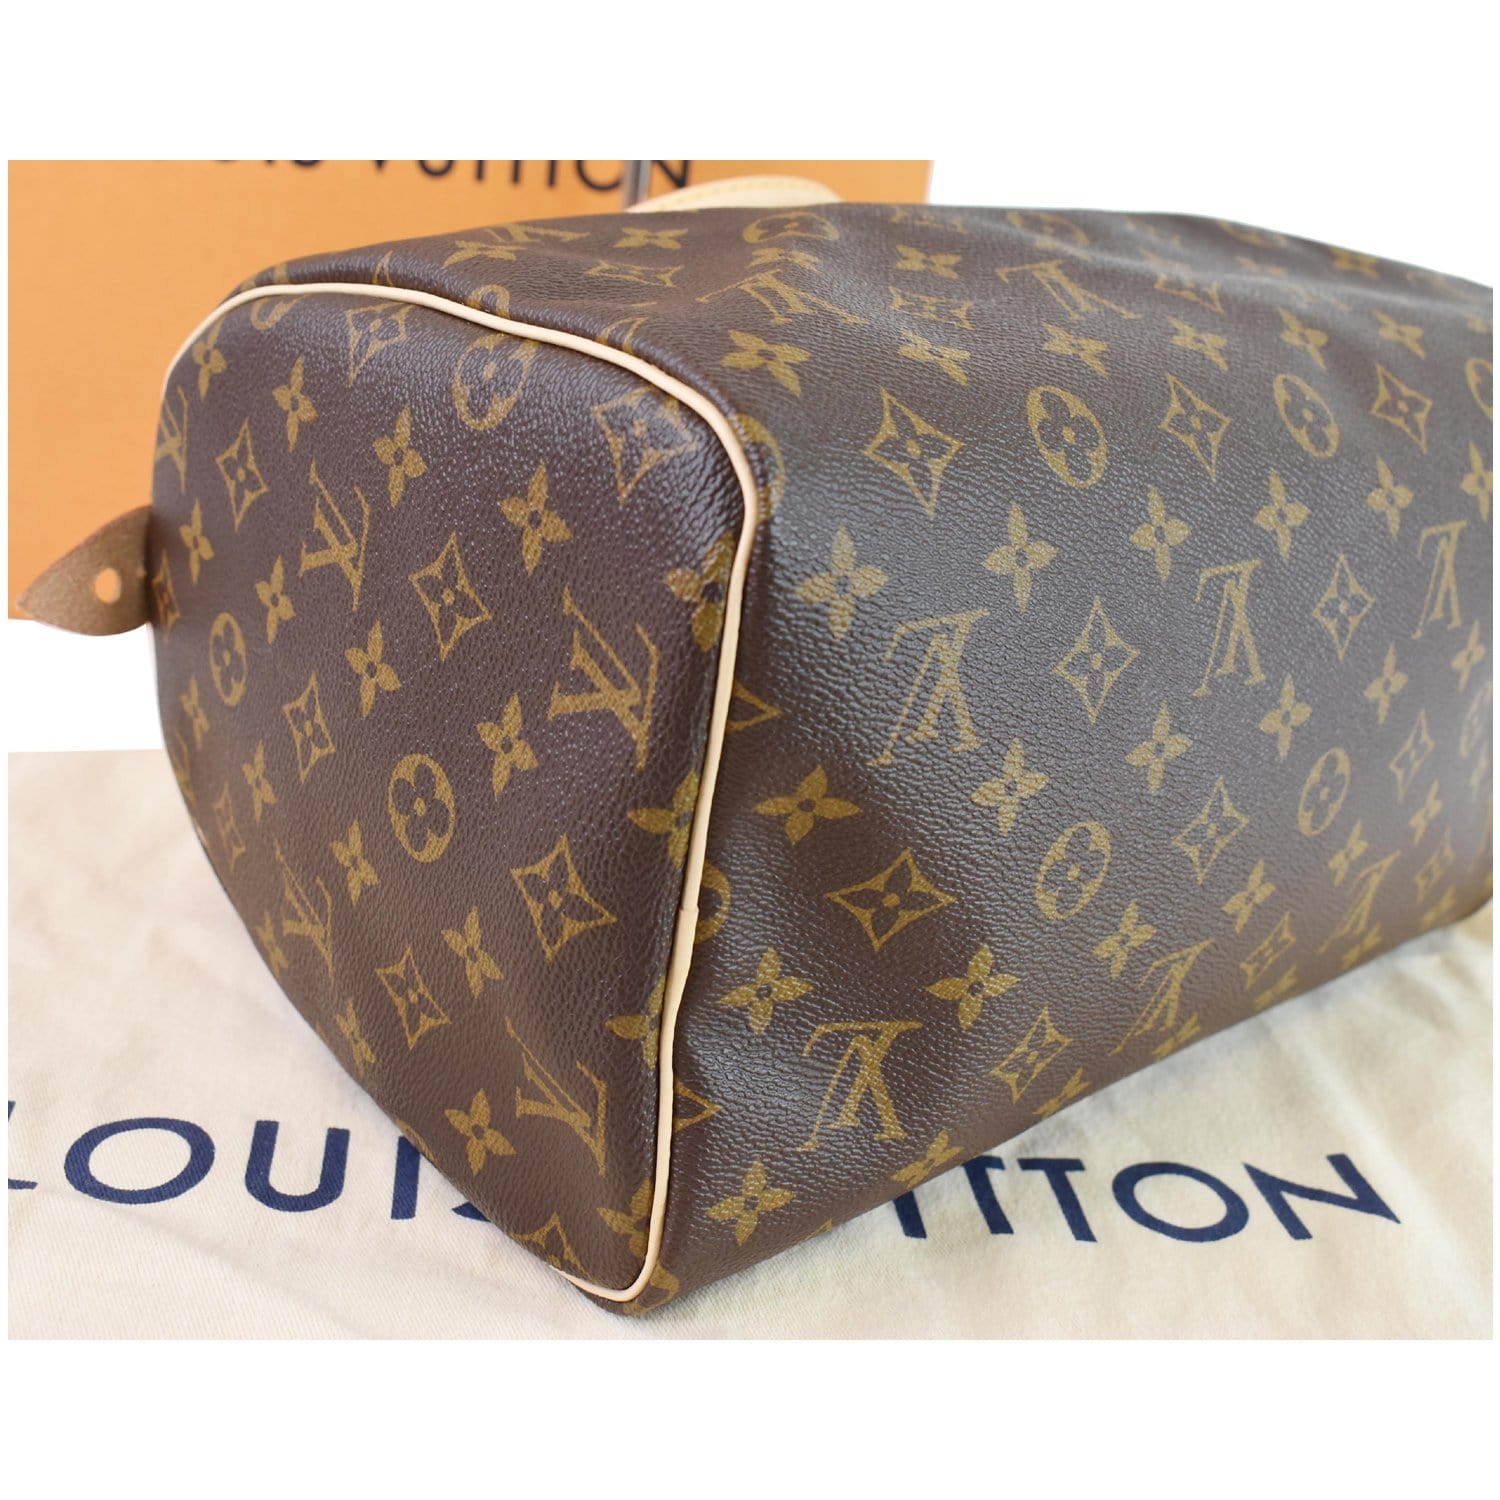 Speedy leather handbag Louis Vuitton Brown in Leather - 31017186